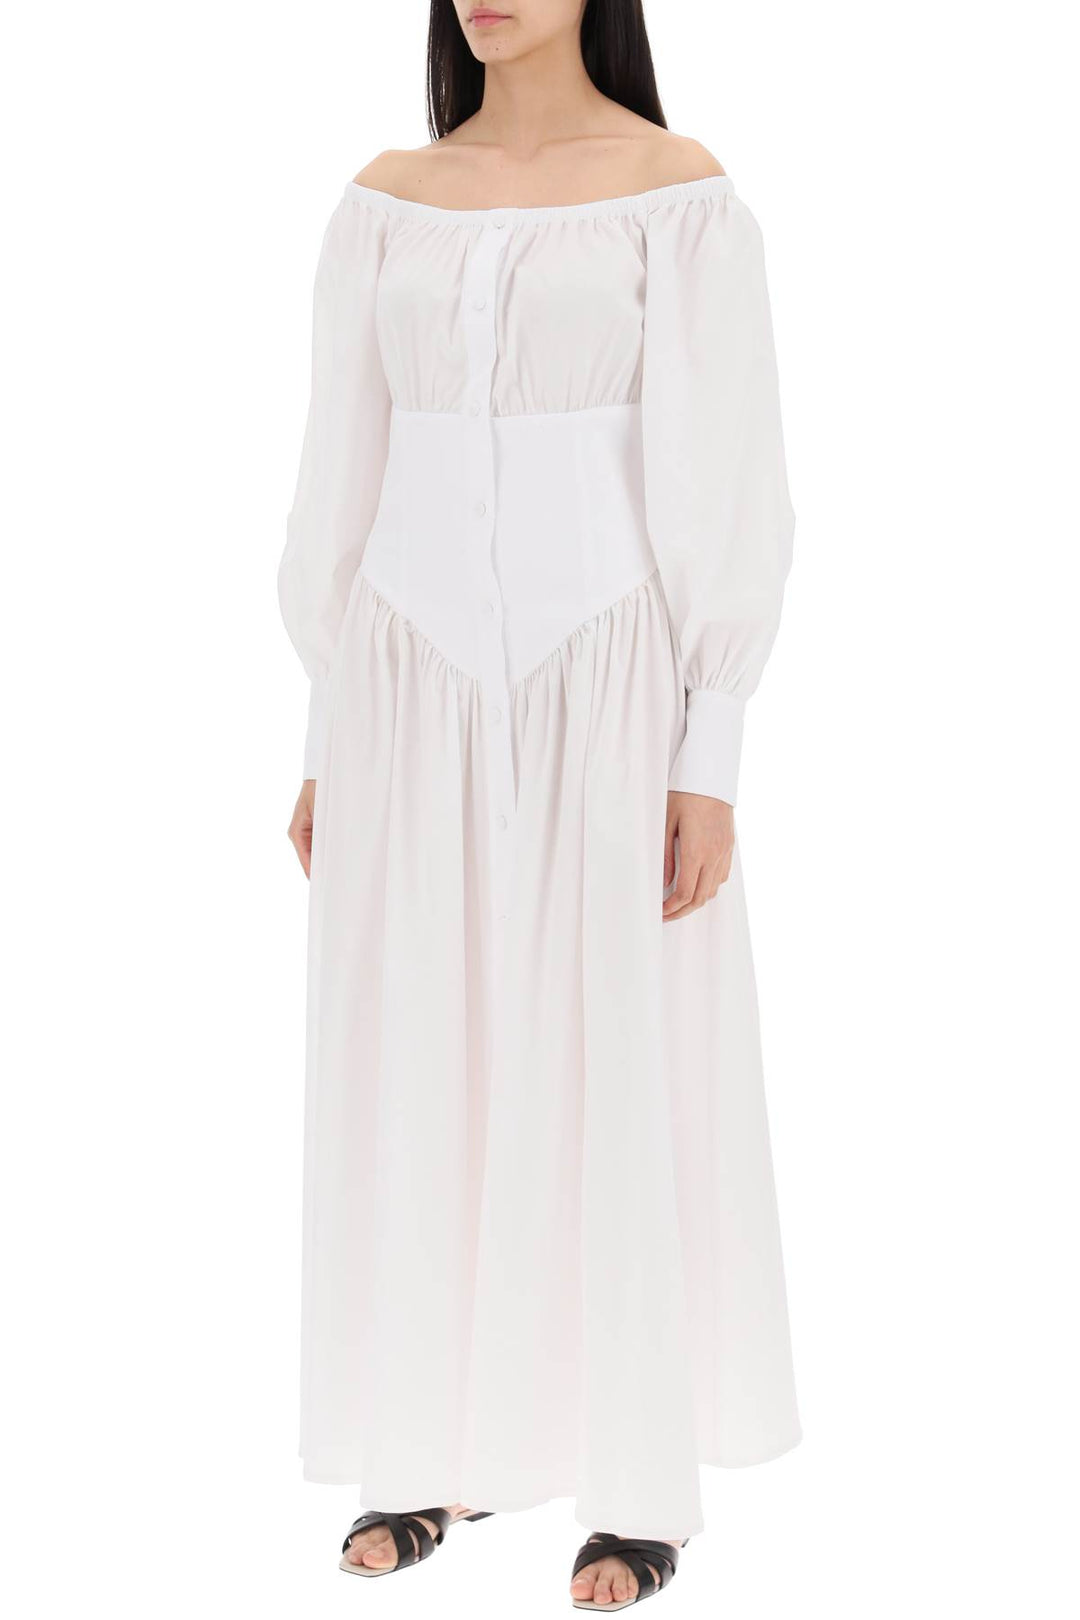 Mvp Wardrobe Long Dress From Port Grima   White